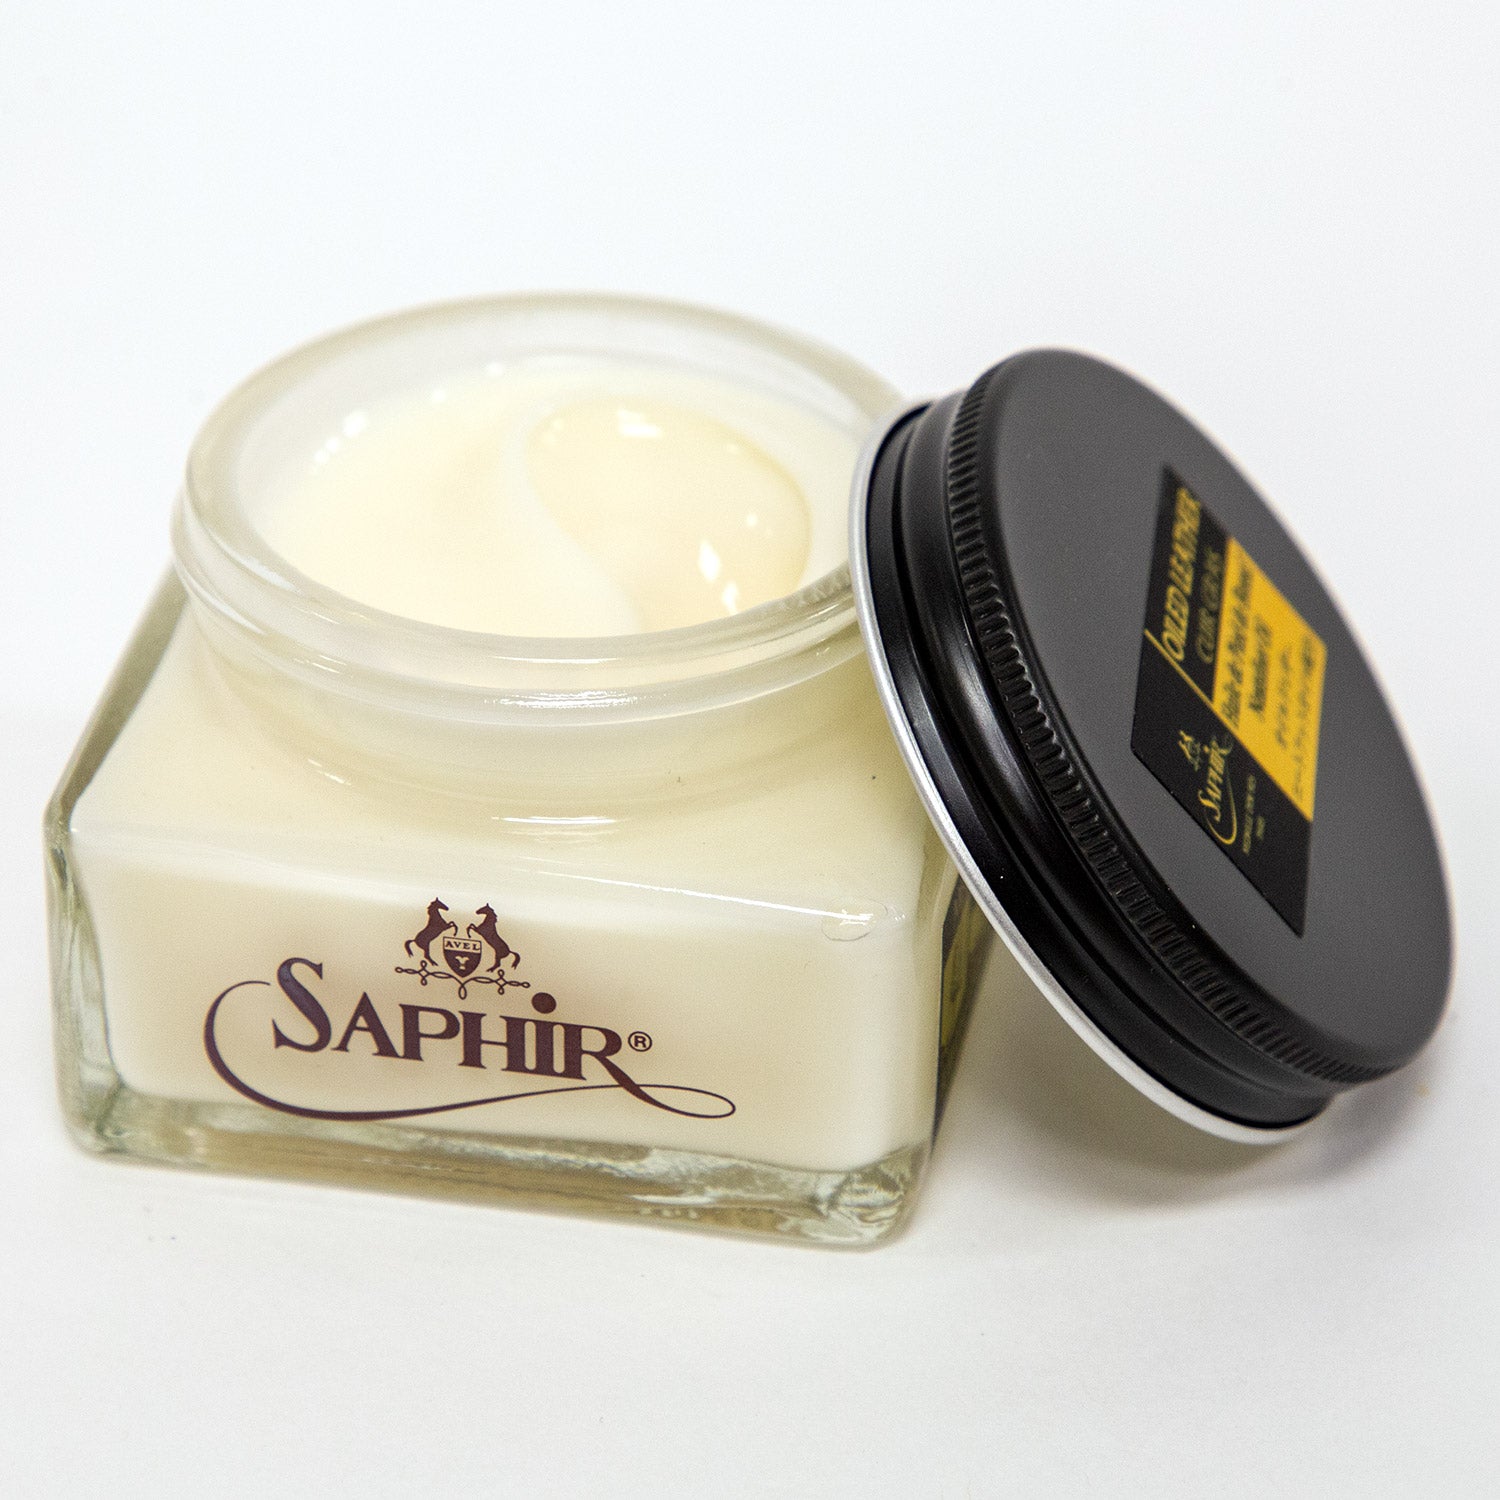 Saphir Creme Cuir Gras l Greasy Leather Cream - Natural